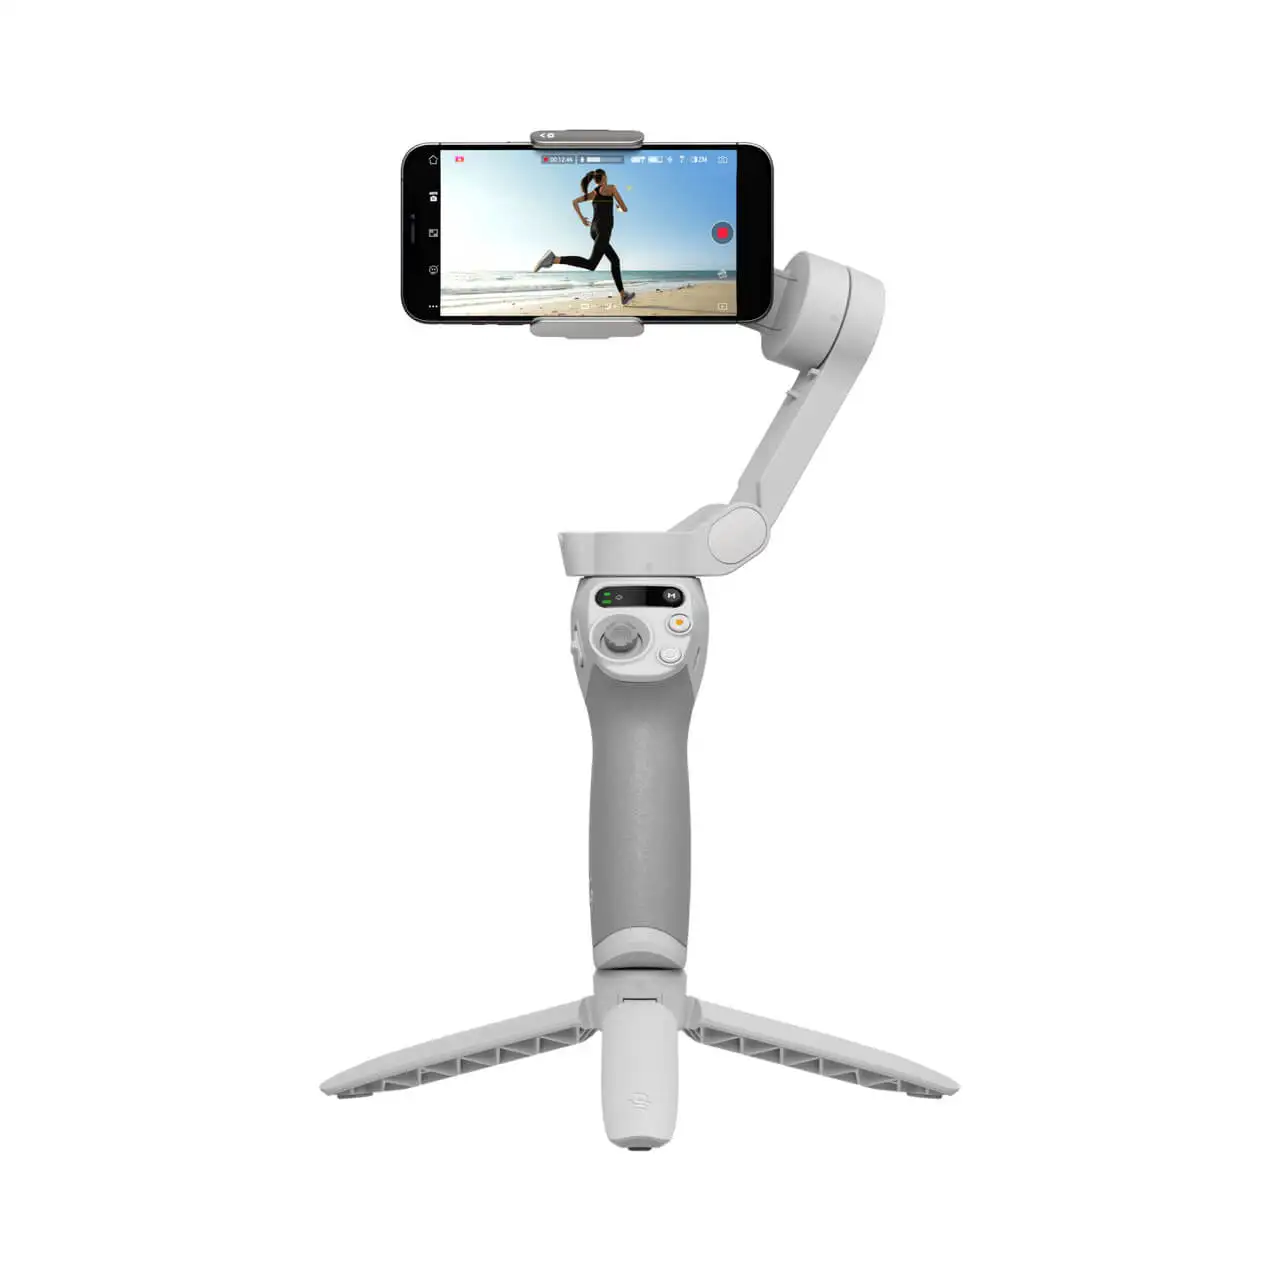 DJI Osmo Mobile SE Handheld Gimbal Stabilizer Selfie Tripod with following shooting mode